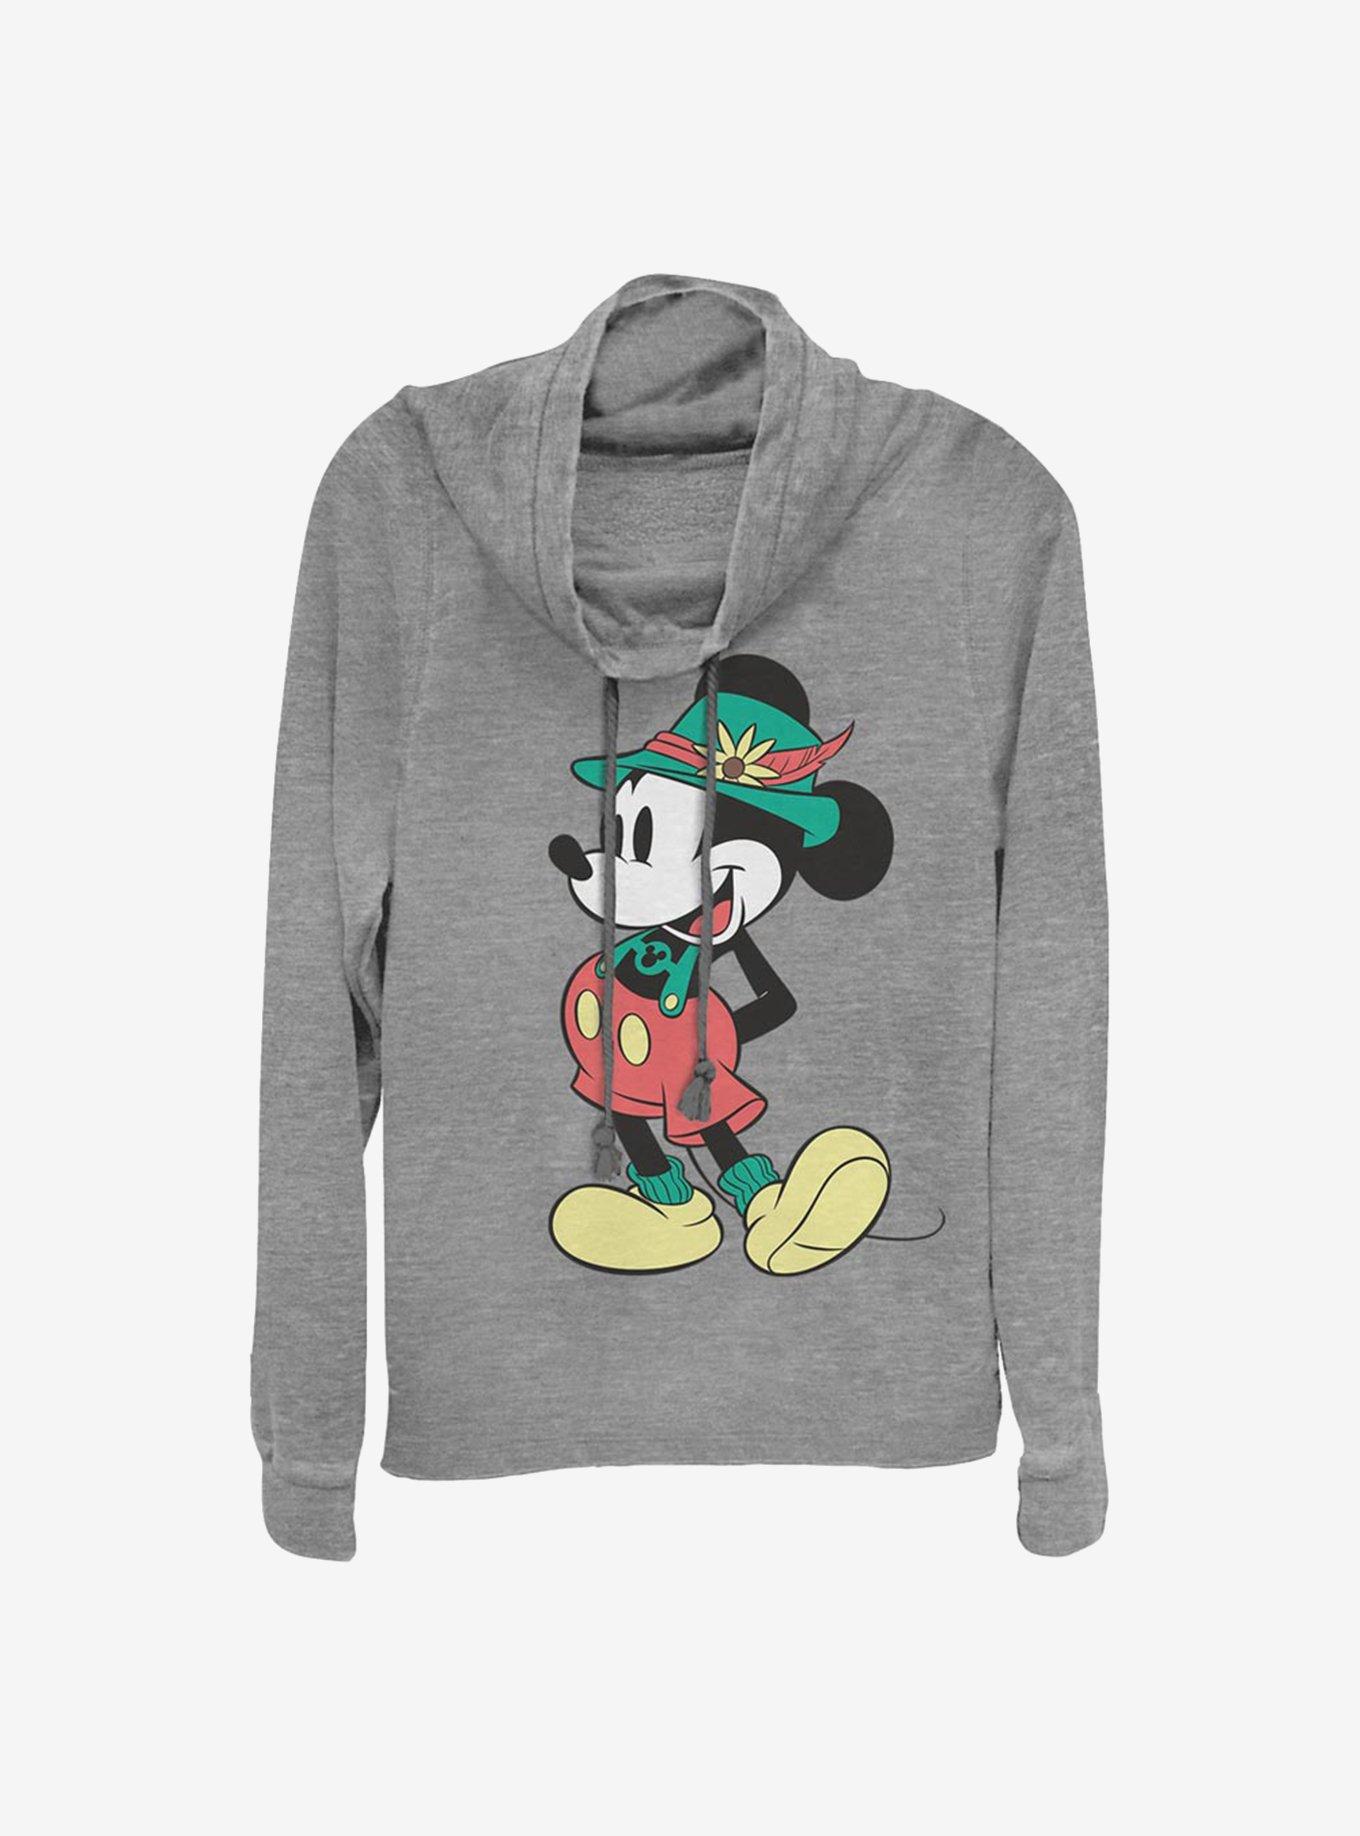 Disney Mickey Mouse Lederhosen Cowlneck Long-Sleeve Girls Top, GRAY HTR, hi-res